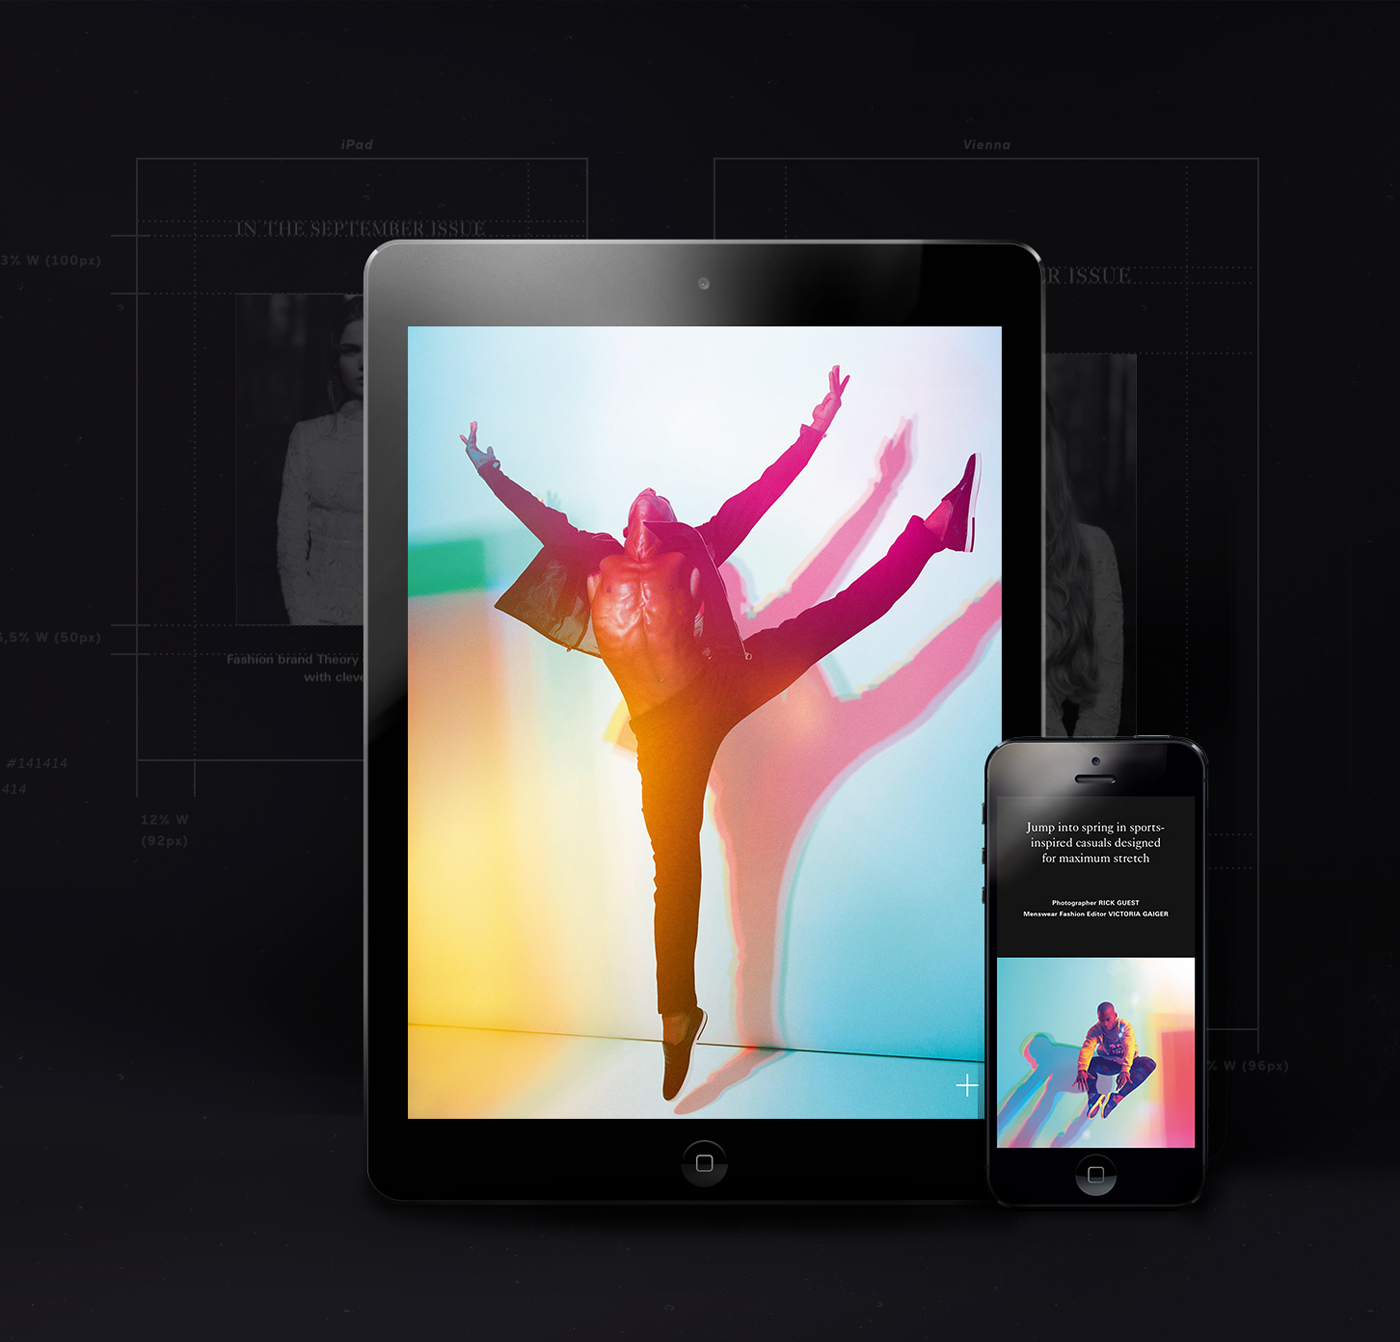 Harrods London magazine iPad iphone android tablet luxury Native Responsive cms modular